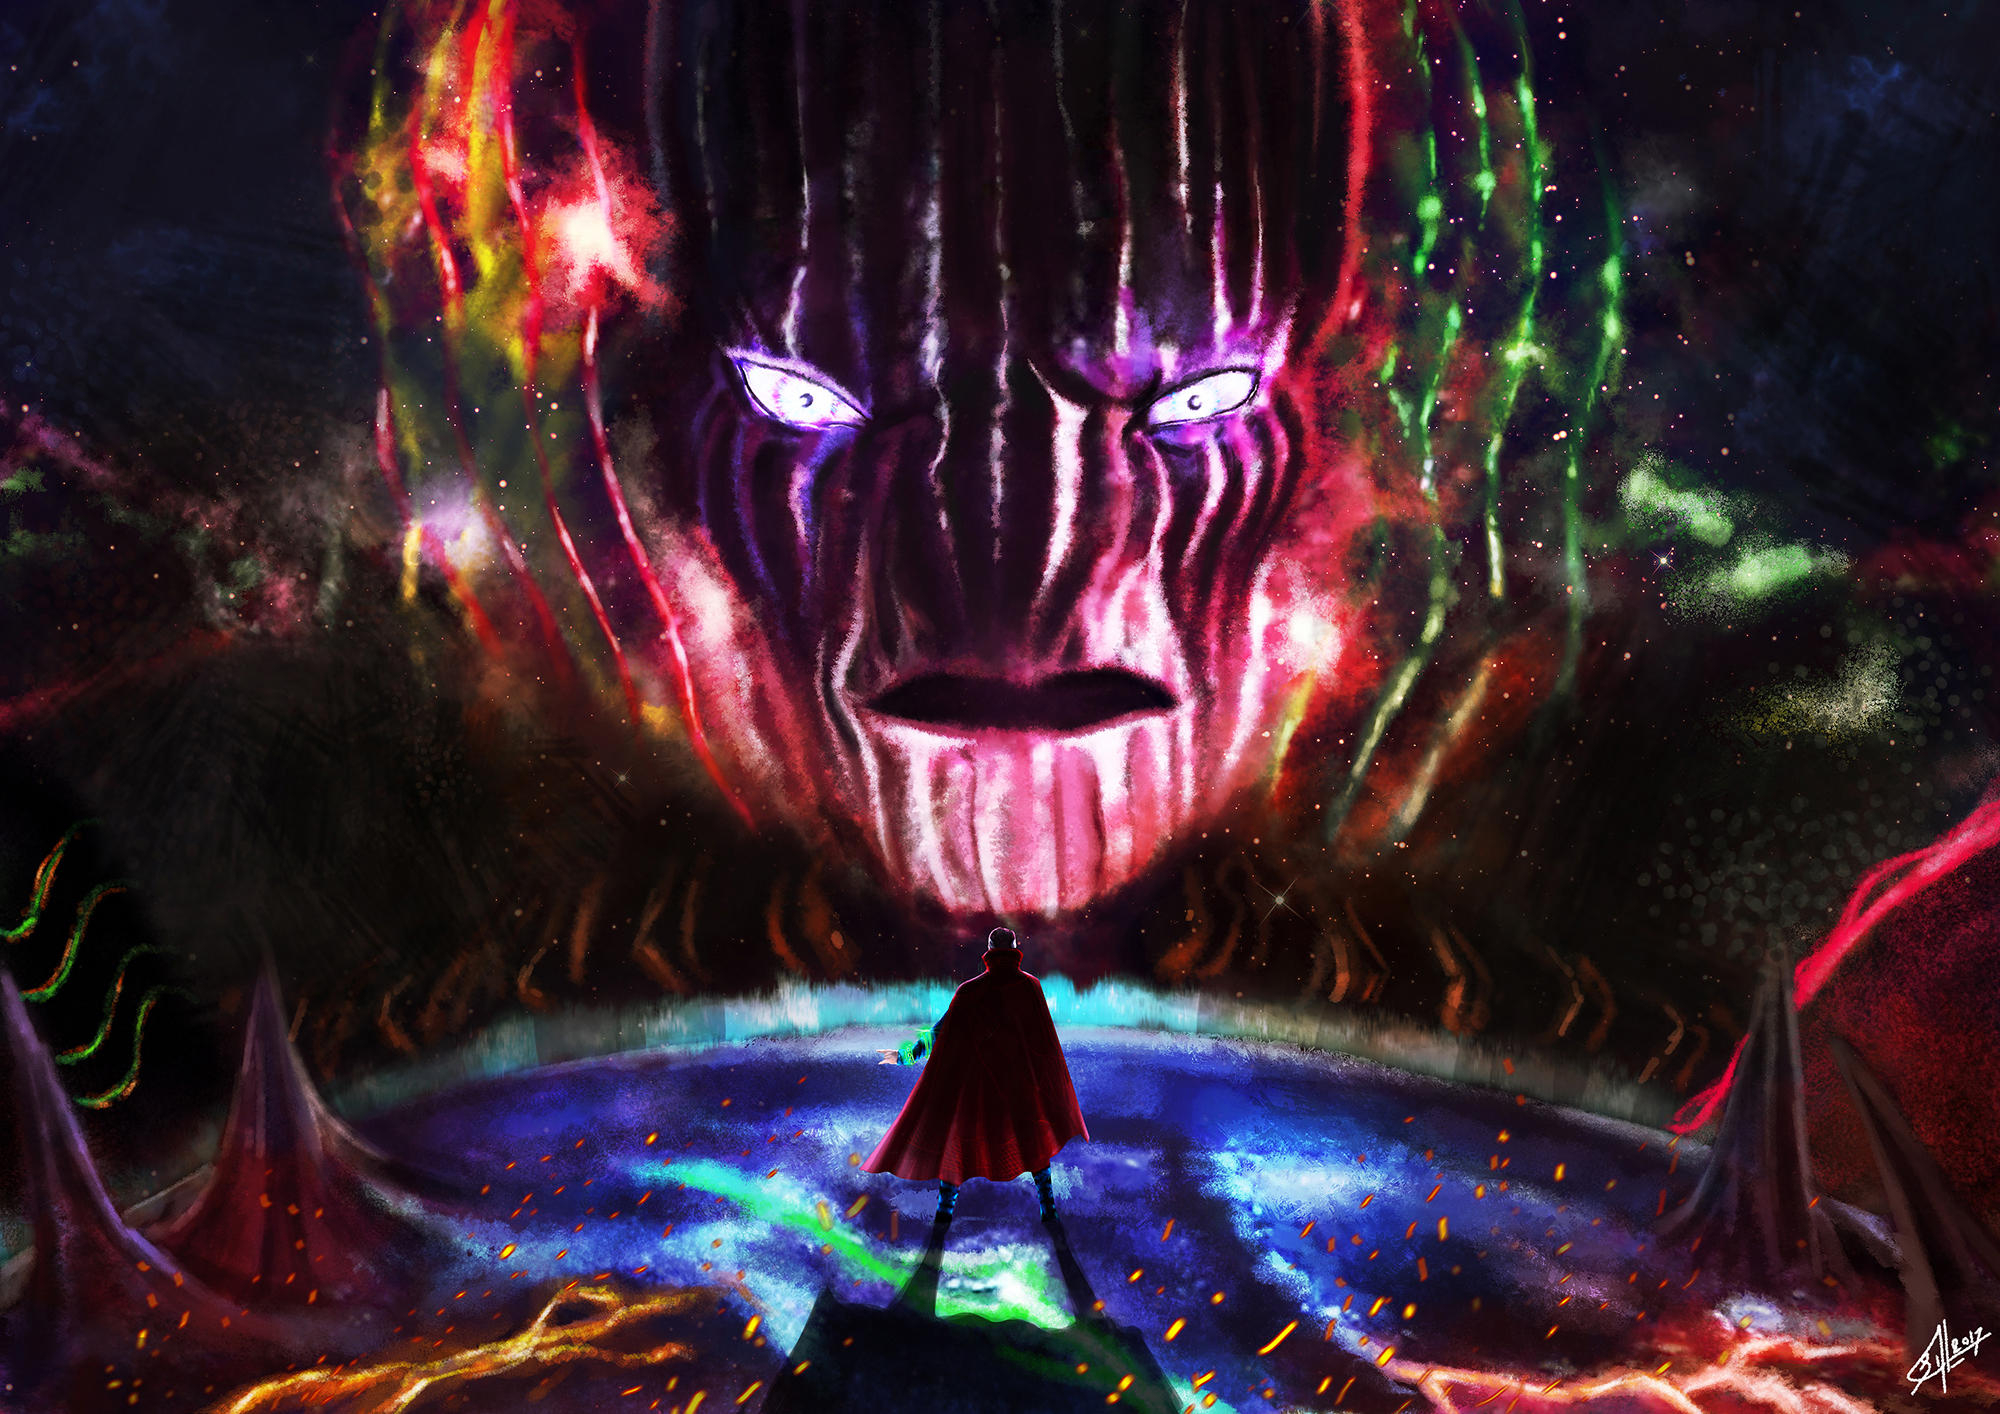 Marvel Doctor Strange Digital Art, HD Superheroes, 4k ...